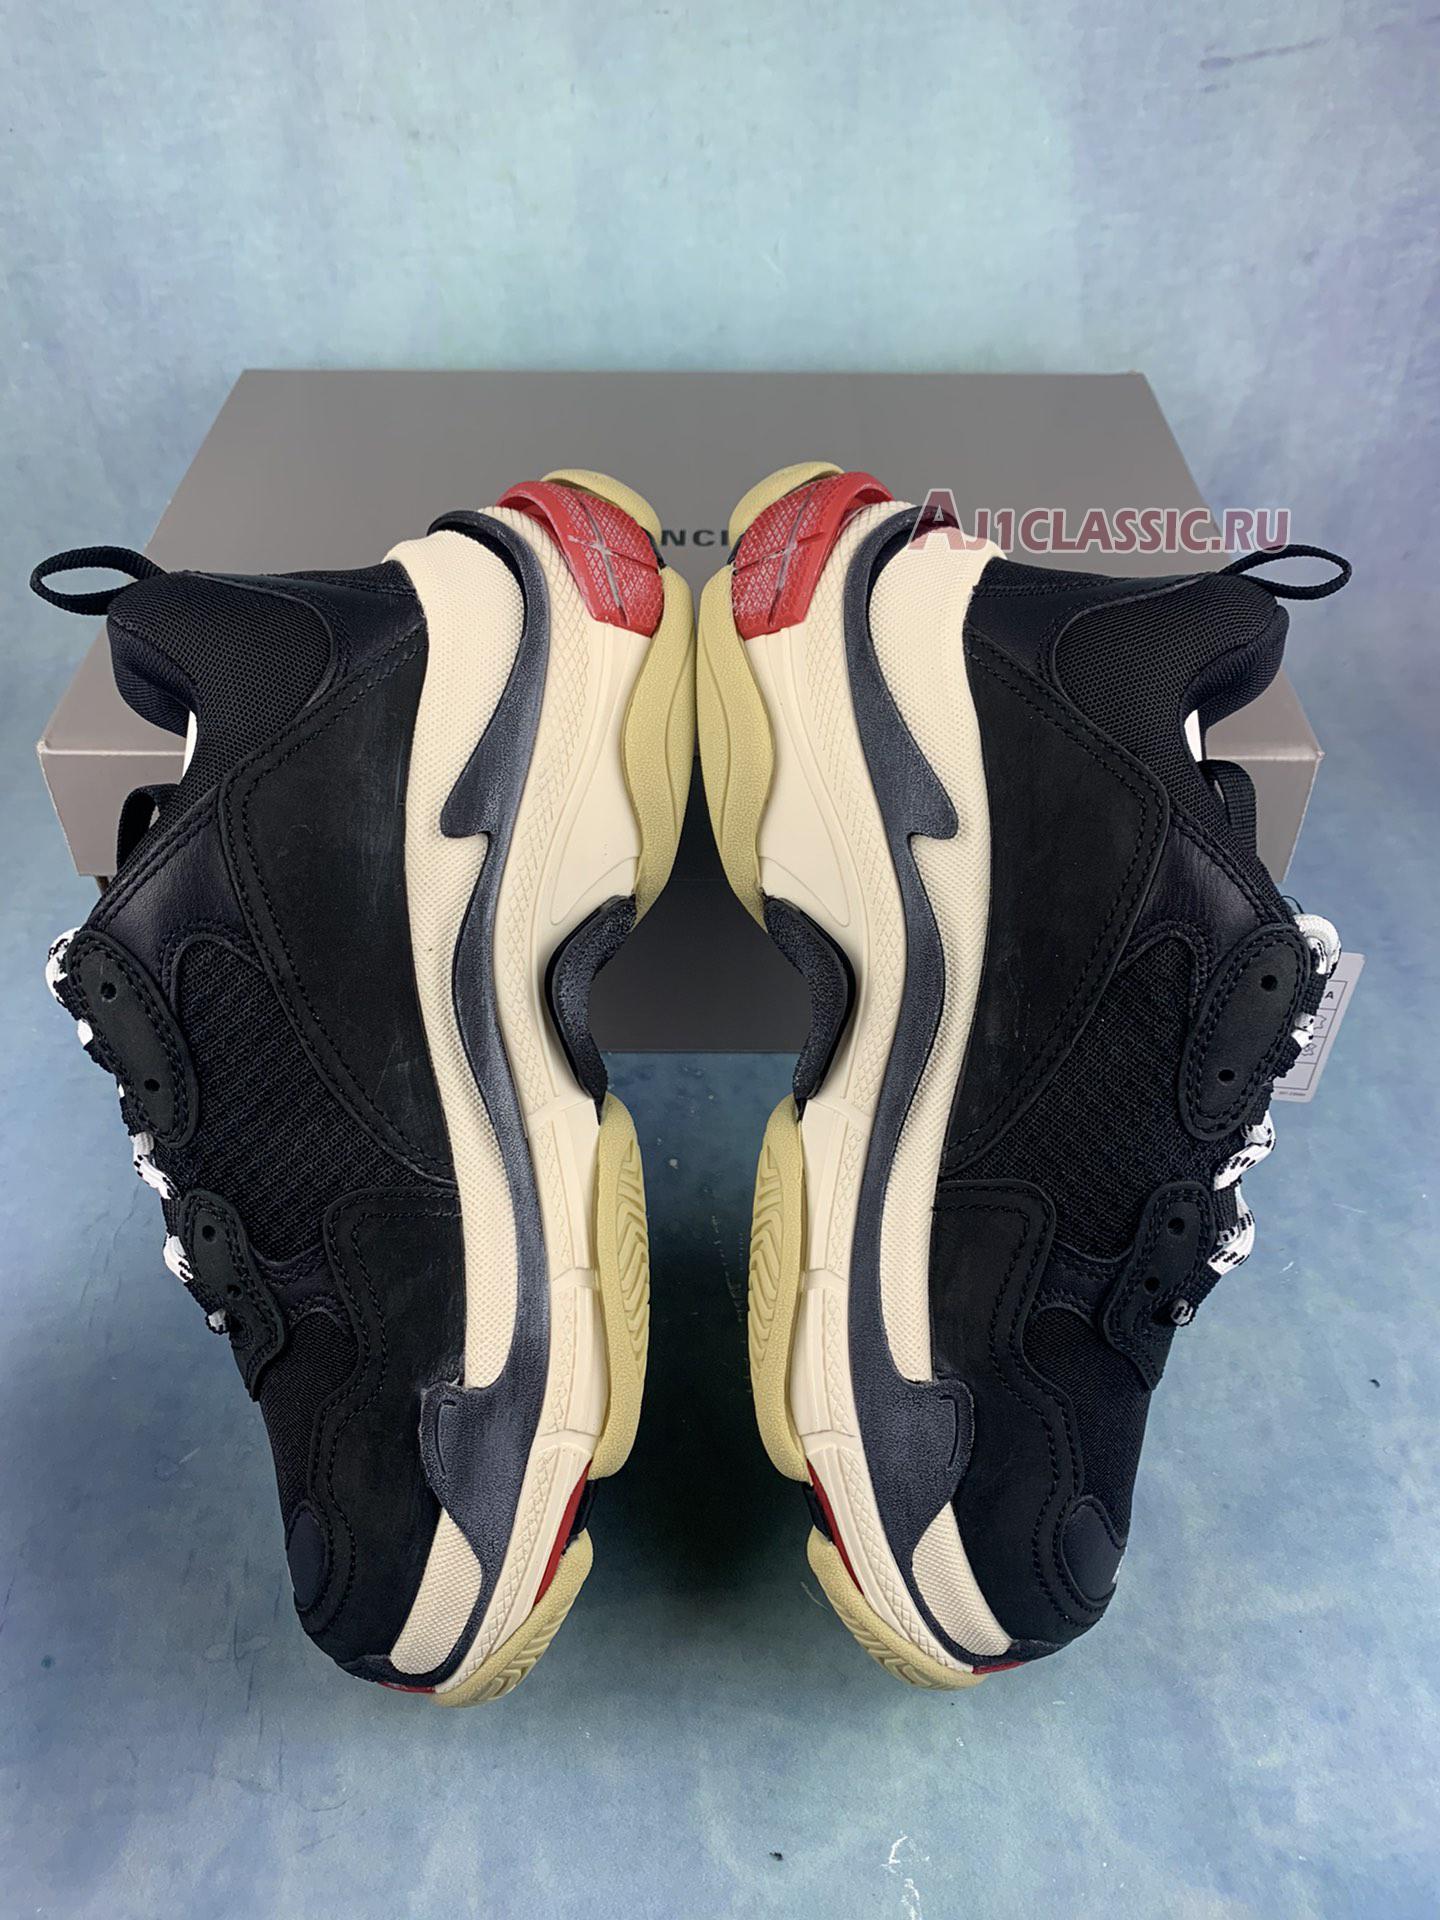 Balenciaga Triple S Sneaker "Black Red" 2018 533882 W09O1 1000